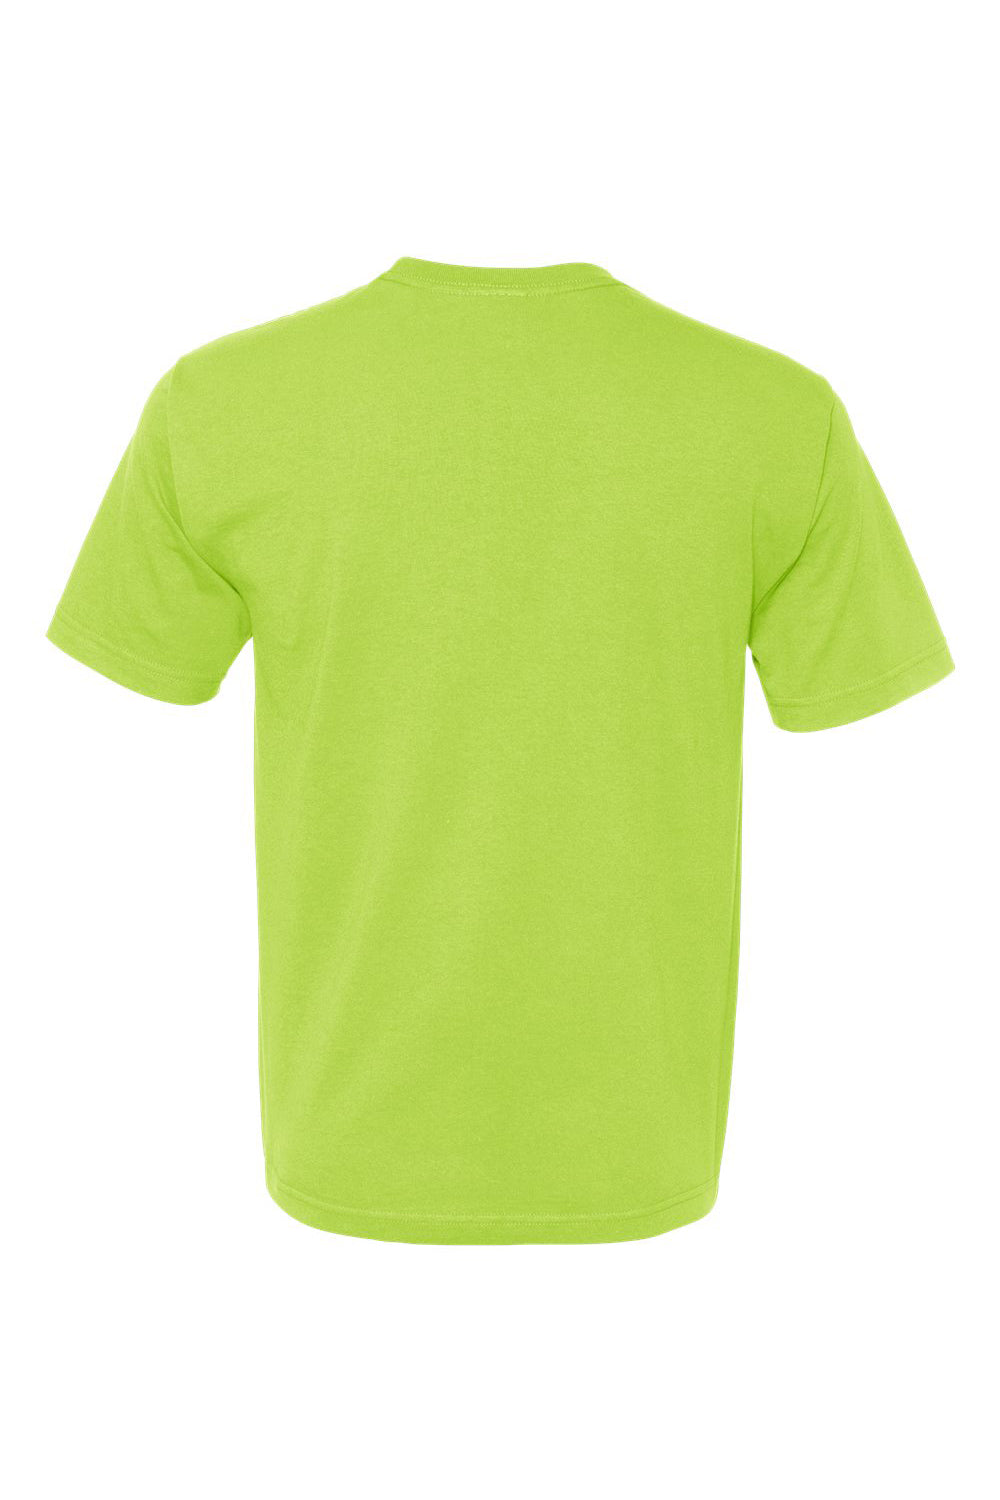 Bayside BA5040 Mens USA Made Short Sleeve Crewneck T-Shirt Lime Green Flat Back